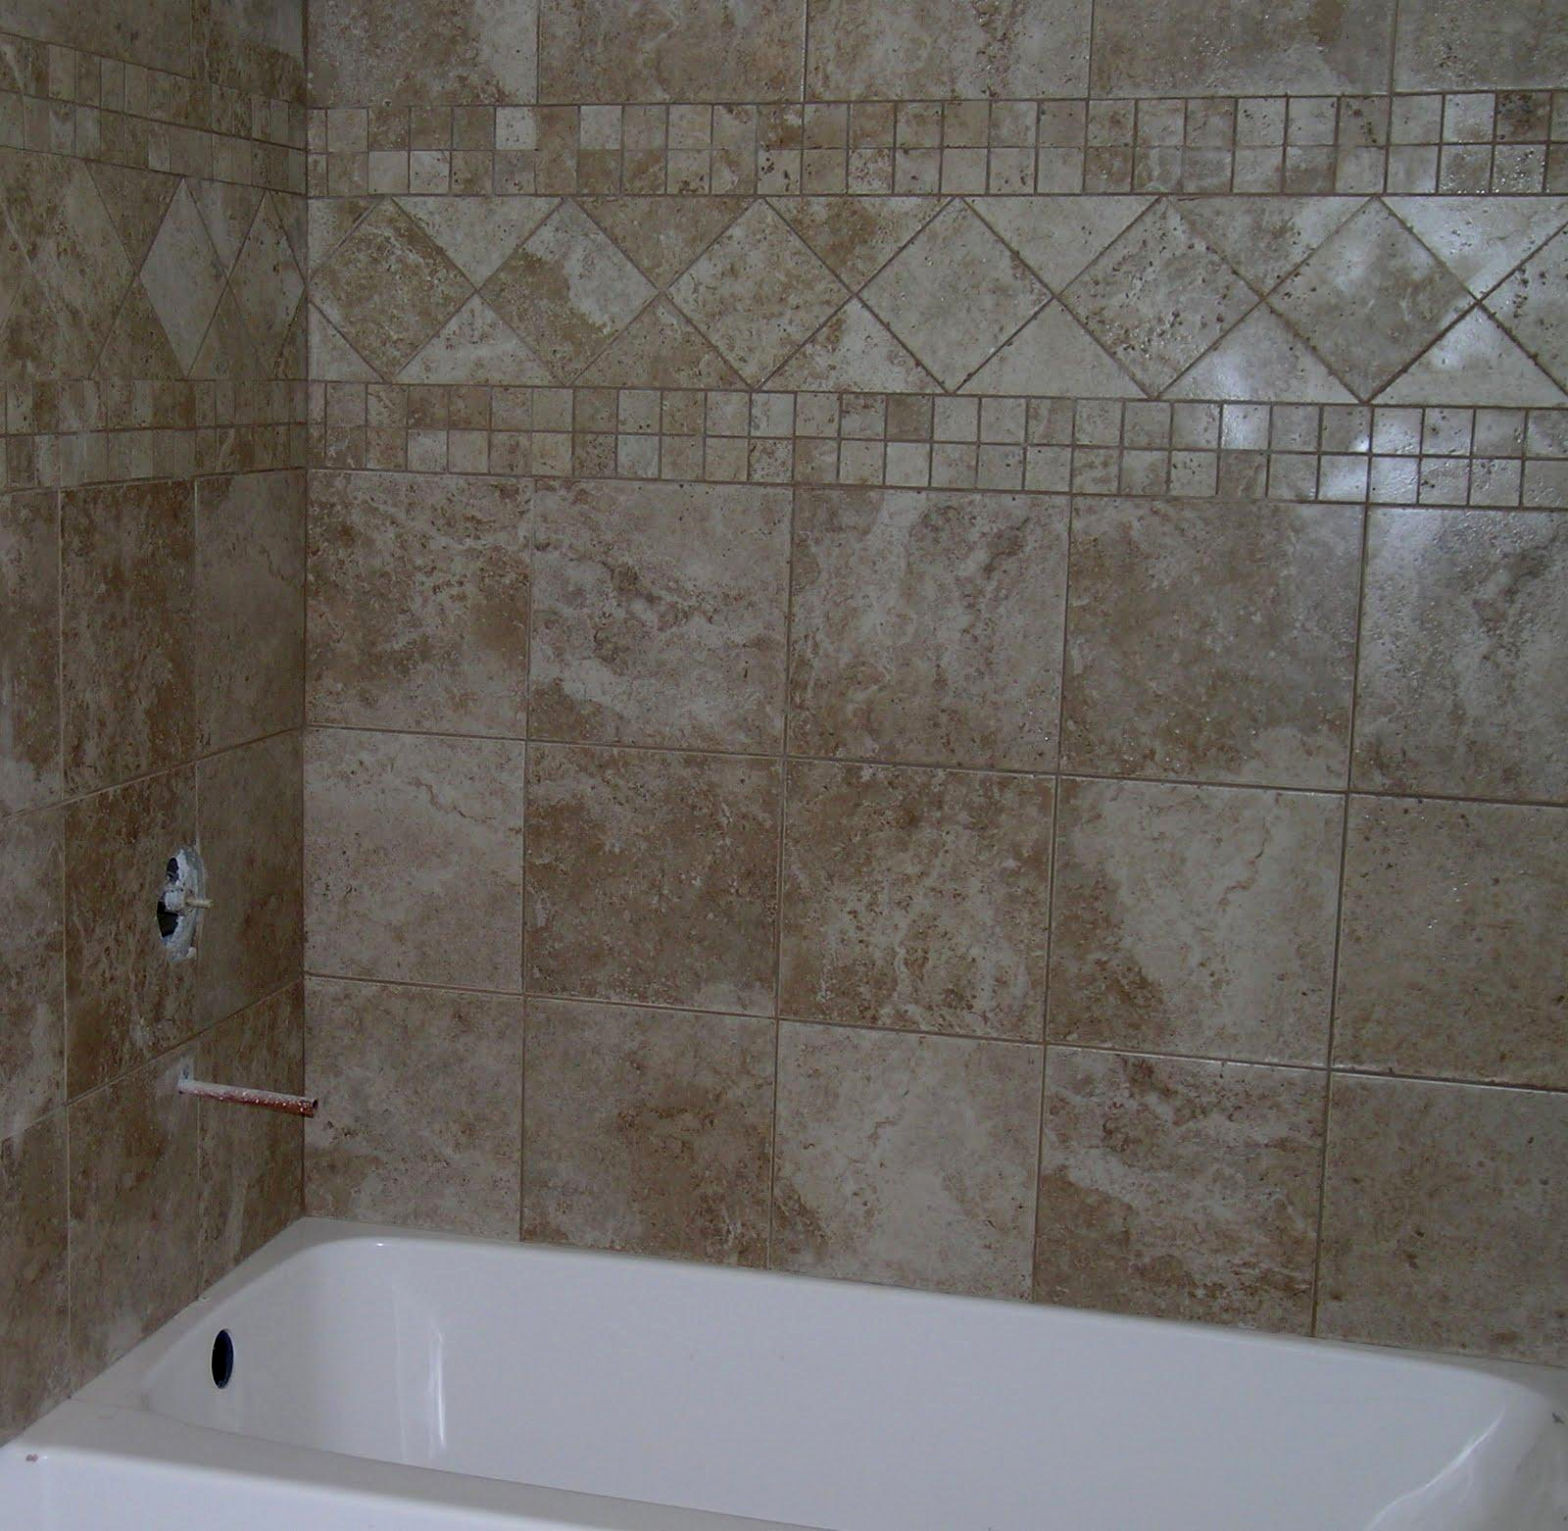 Home Depot Bathroom Wall Tile
 Elegant Peel and Stick Bathroom Wall Tiles Home